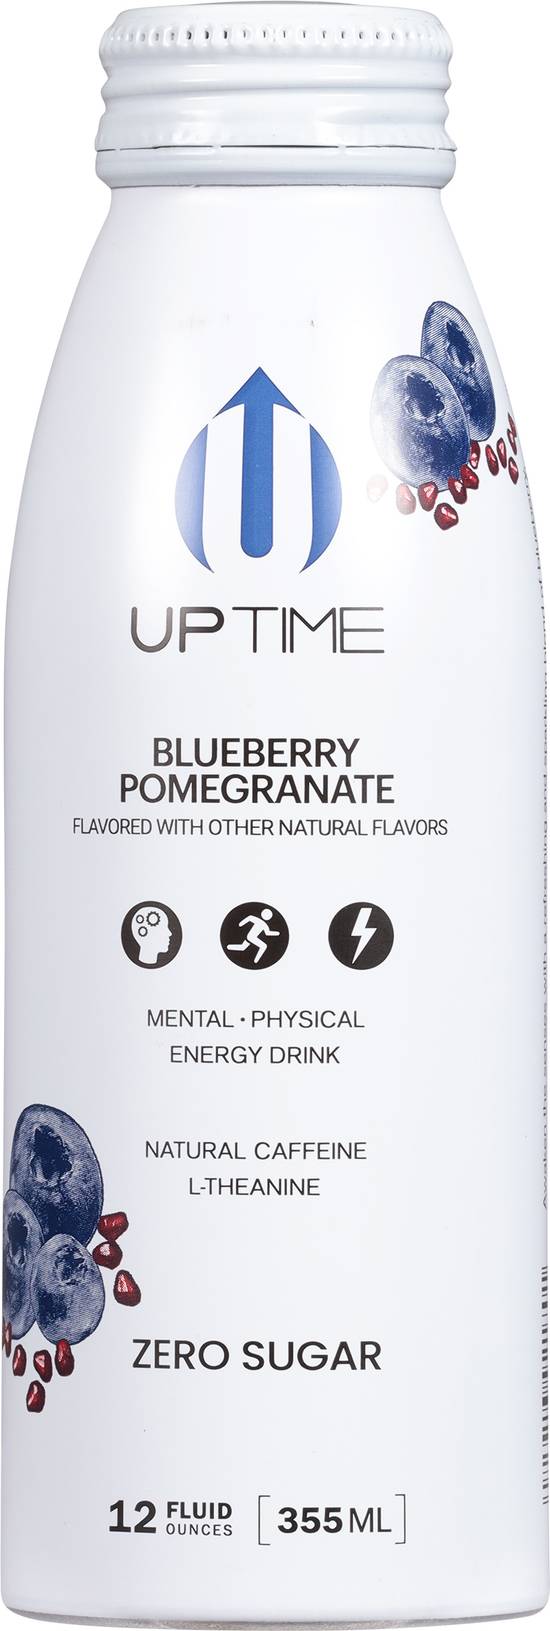 Uptime Blueberry Pomegranate Sugar Free Energy Drink (12 fl oz)